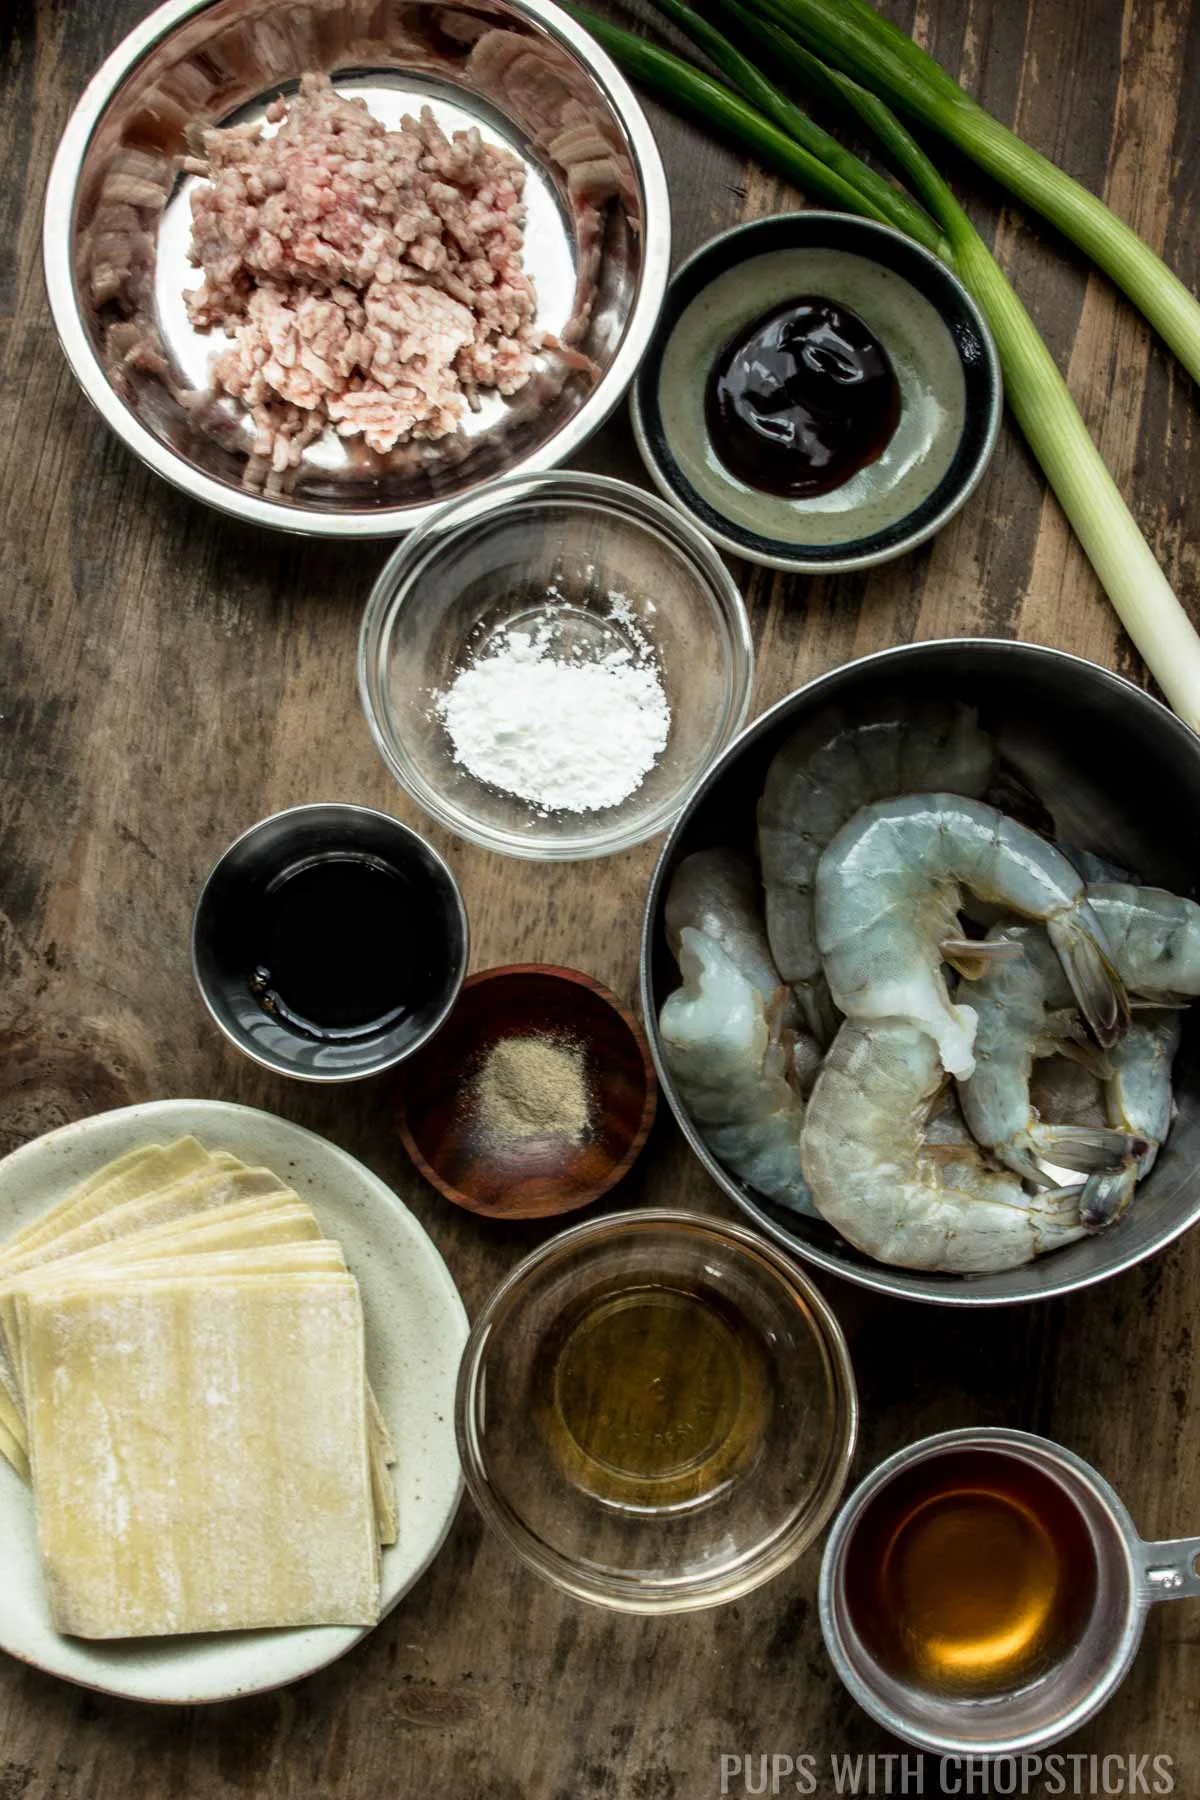 Ingredients for wonton dumplings (ground pork, shrimp, green onions, oyster sauce, fish sauce, corn starch, sesame oil, wonton wrappers)